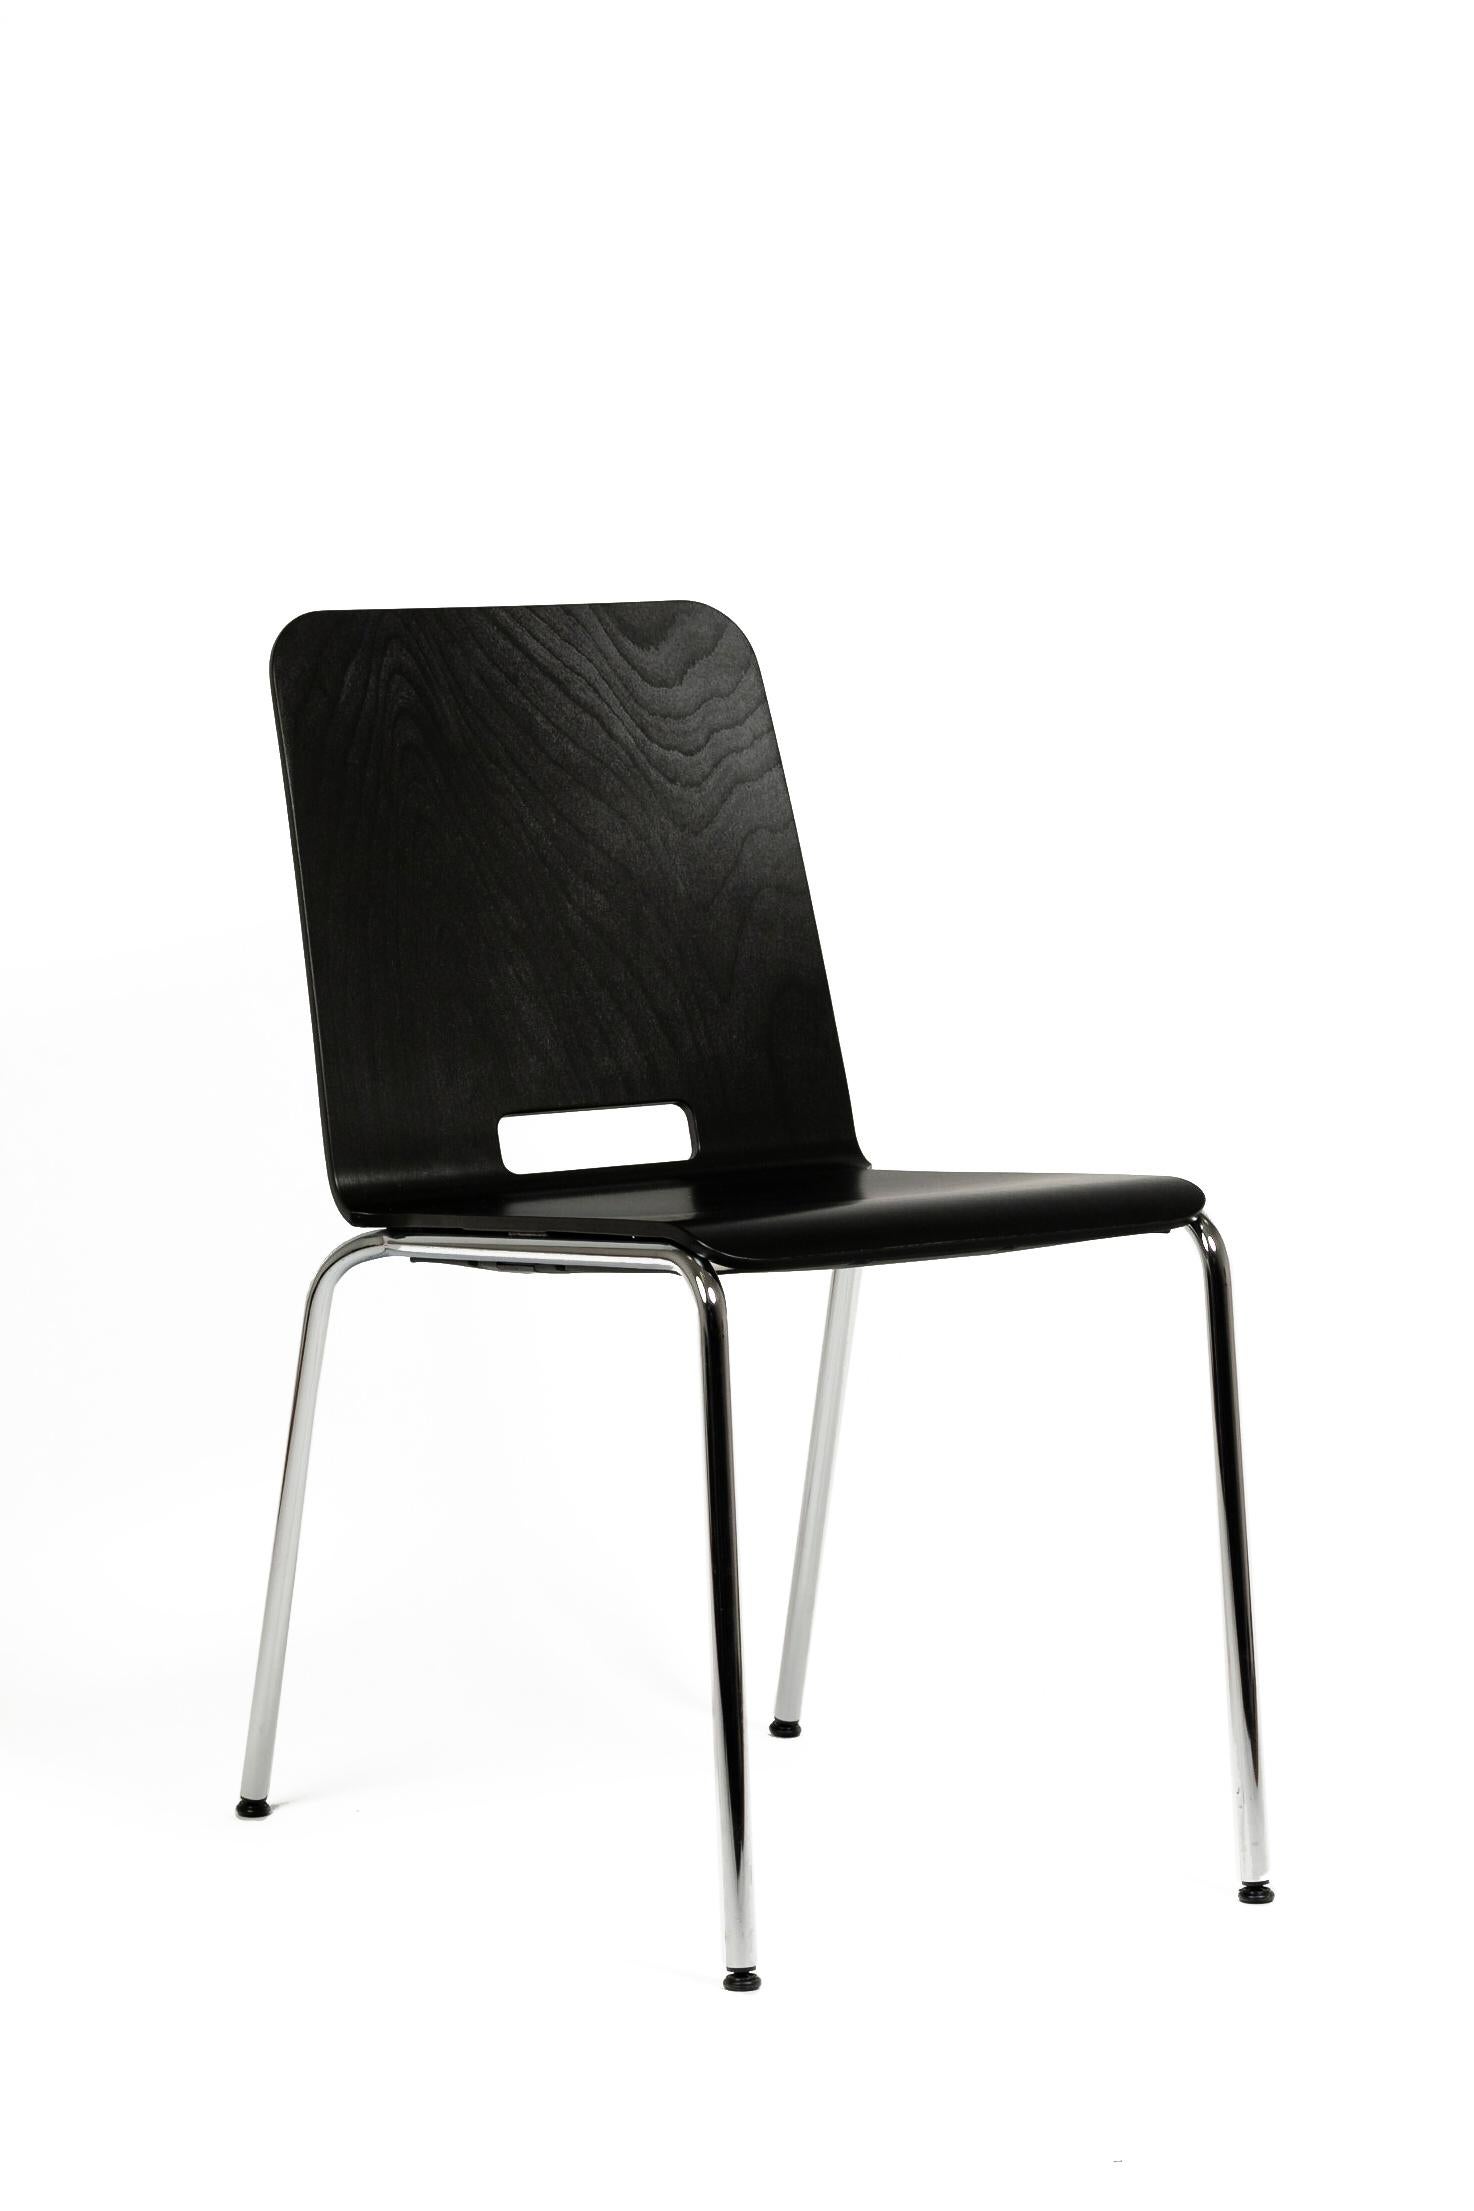 Swiss Dietiker Alta Modern Dining Chair, Designed by Greutmann Bolzern, in Stock